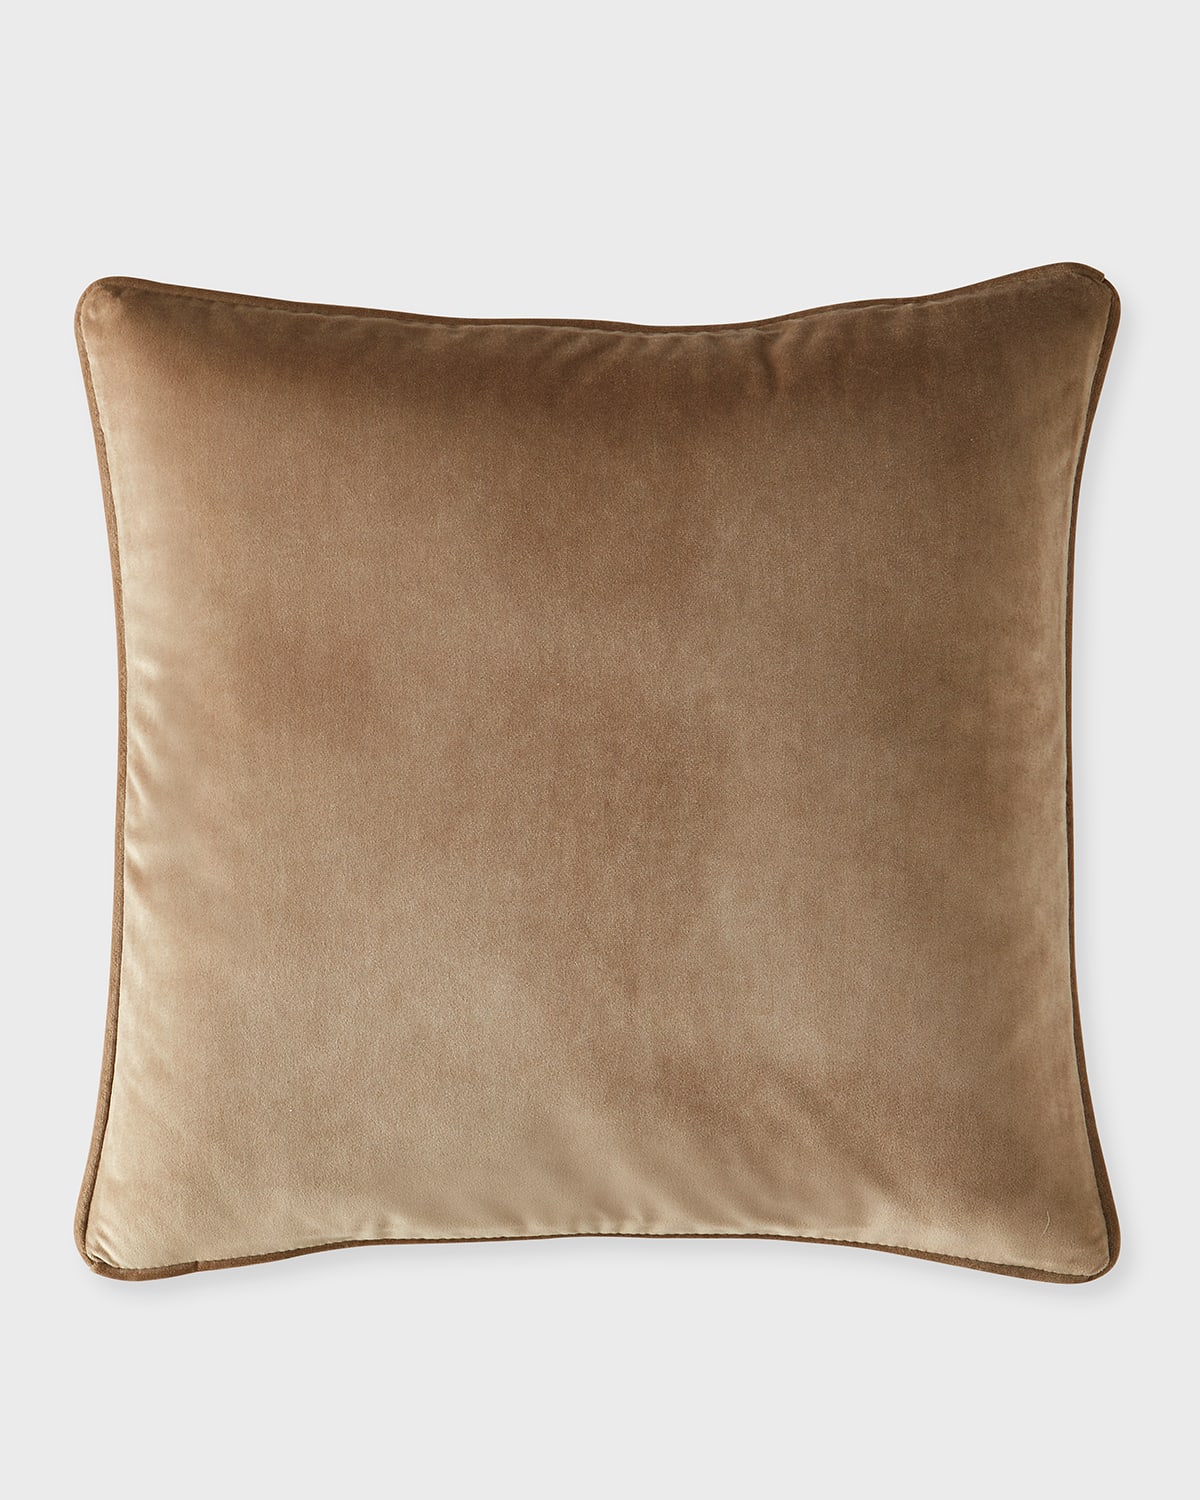 Olivia Quido Makehift Velvet Pillow, 20" Square In Brown